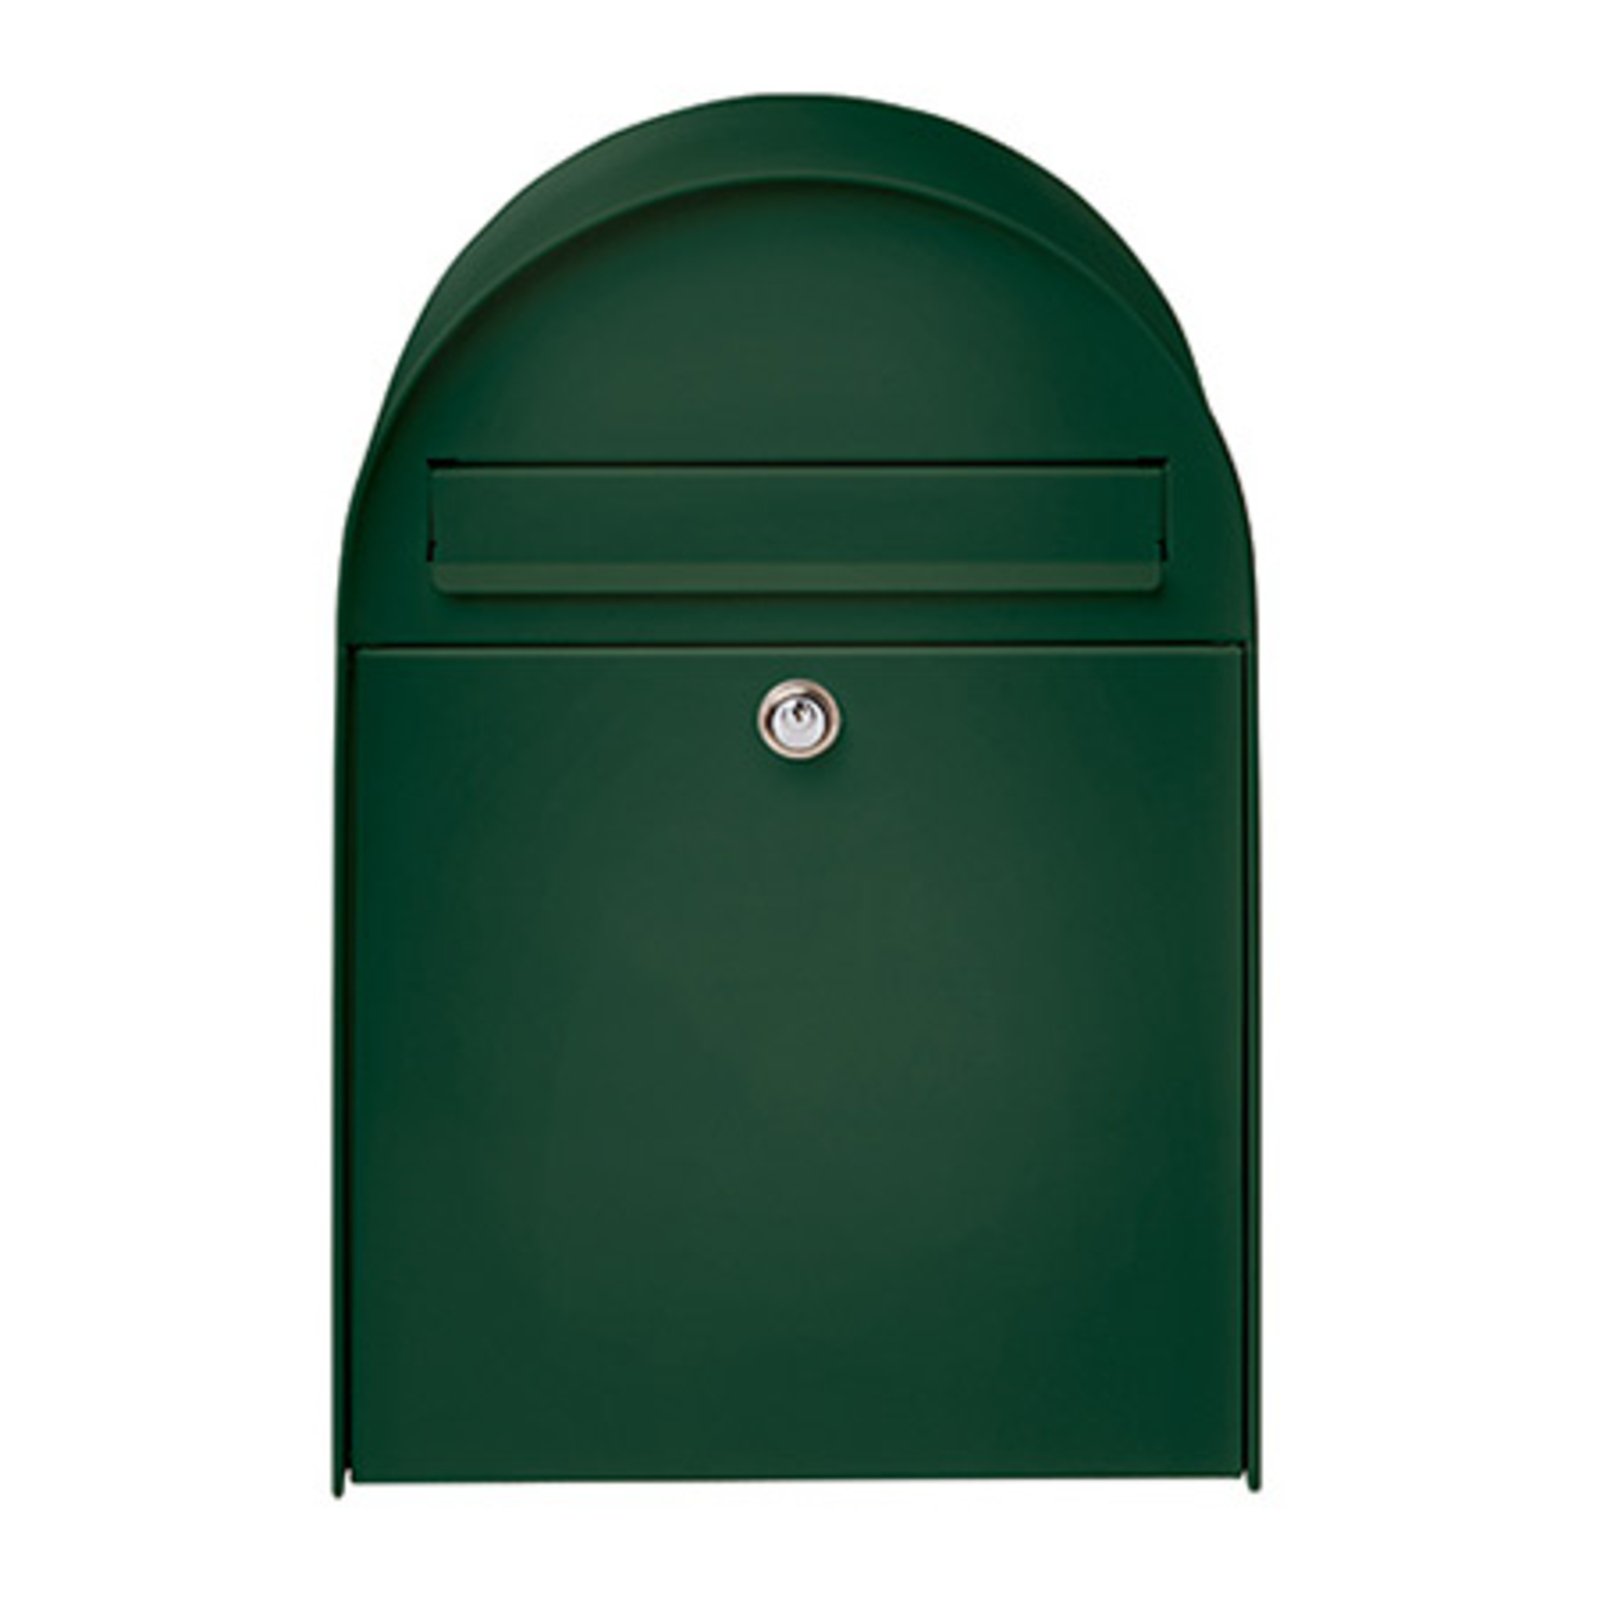 Tilava postilaatikko Nordic 680, vihreä